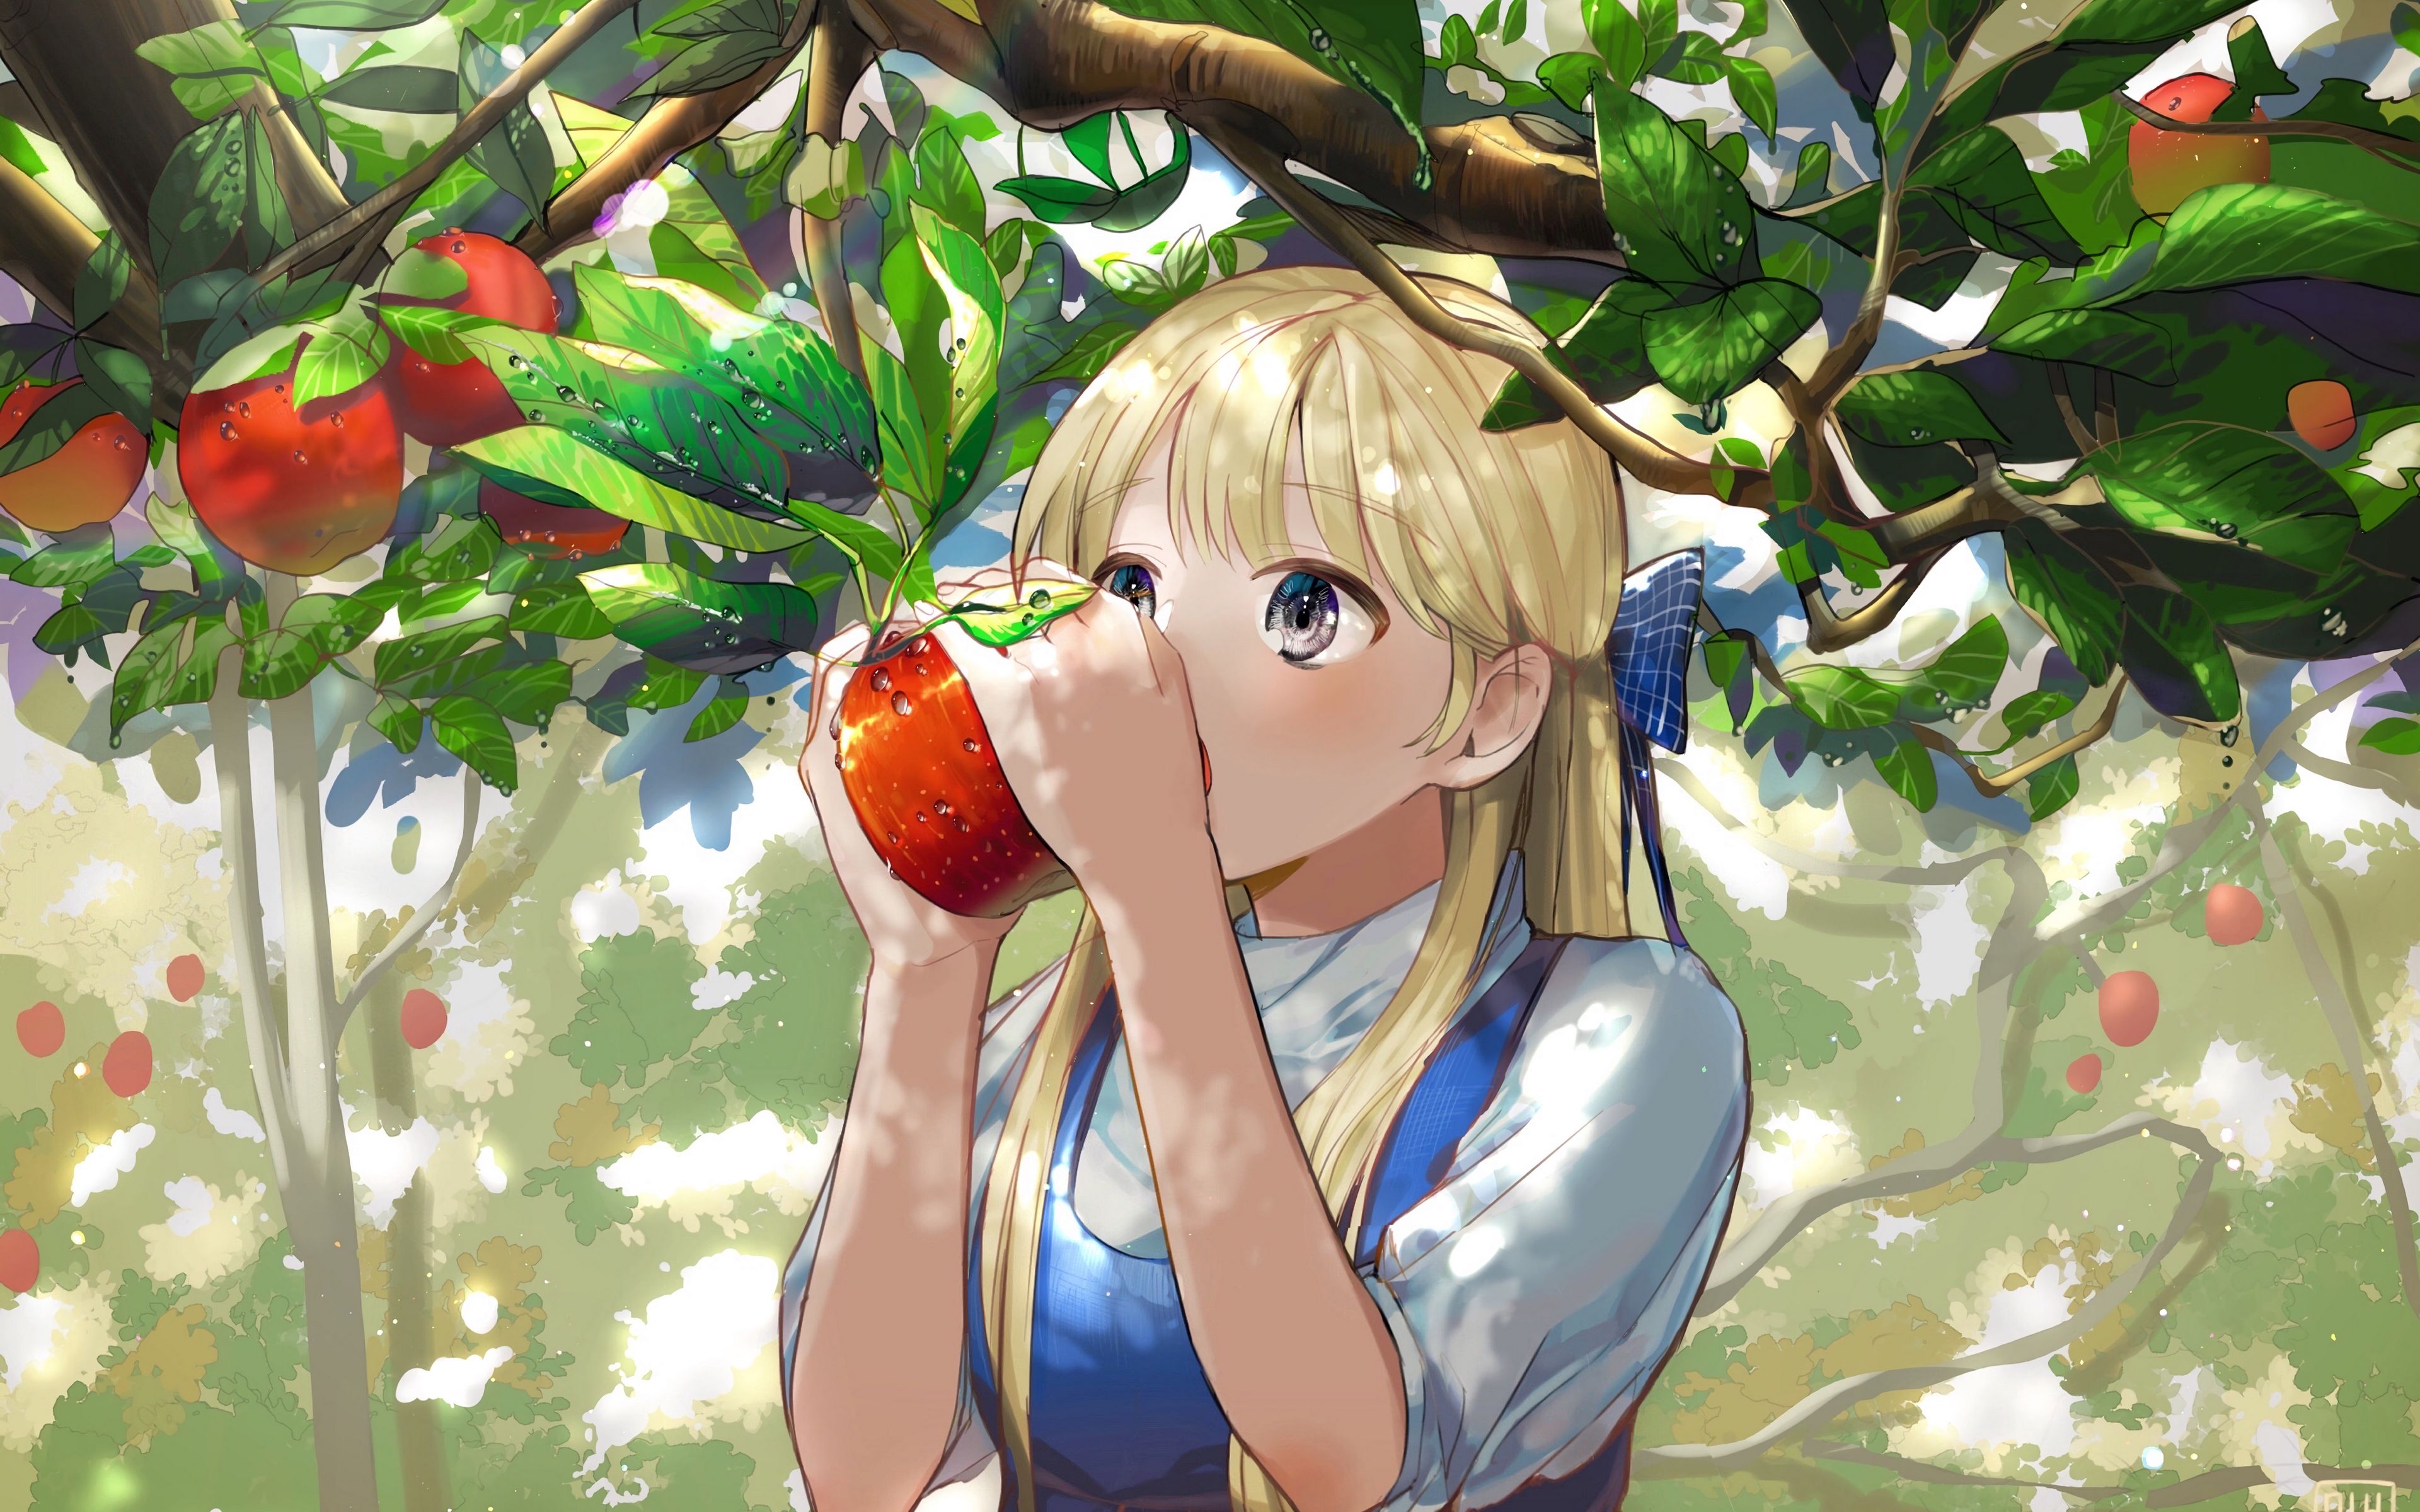 Download wallpaper 3840x2400 girl, apple, garden, anime, art 4k ultra hd  16:10 hd background